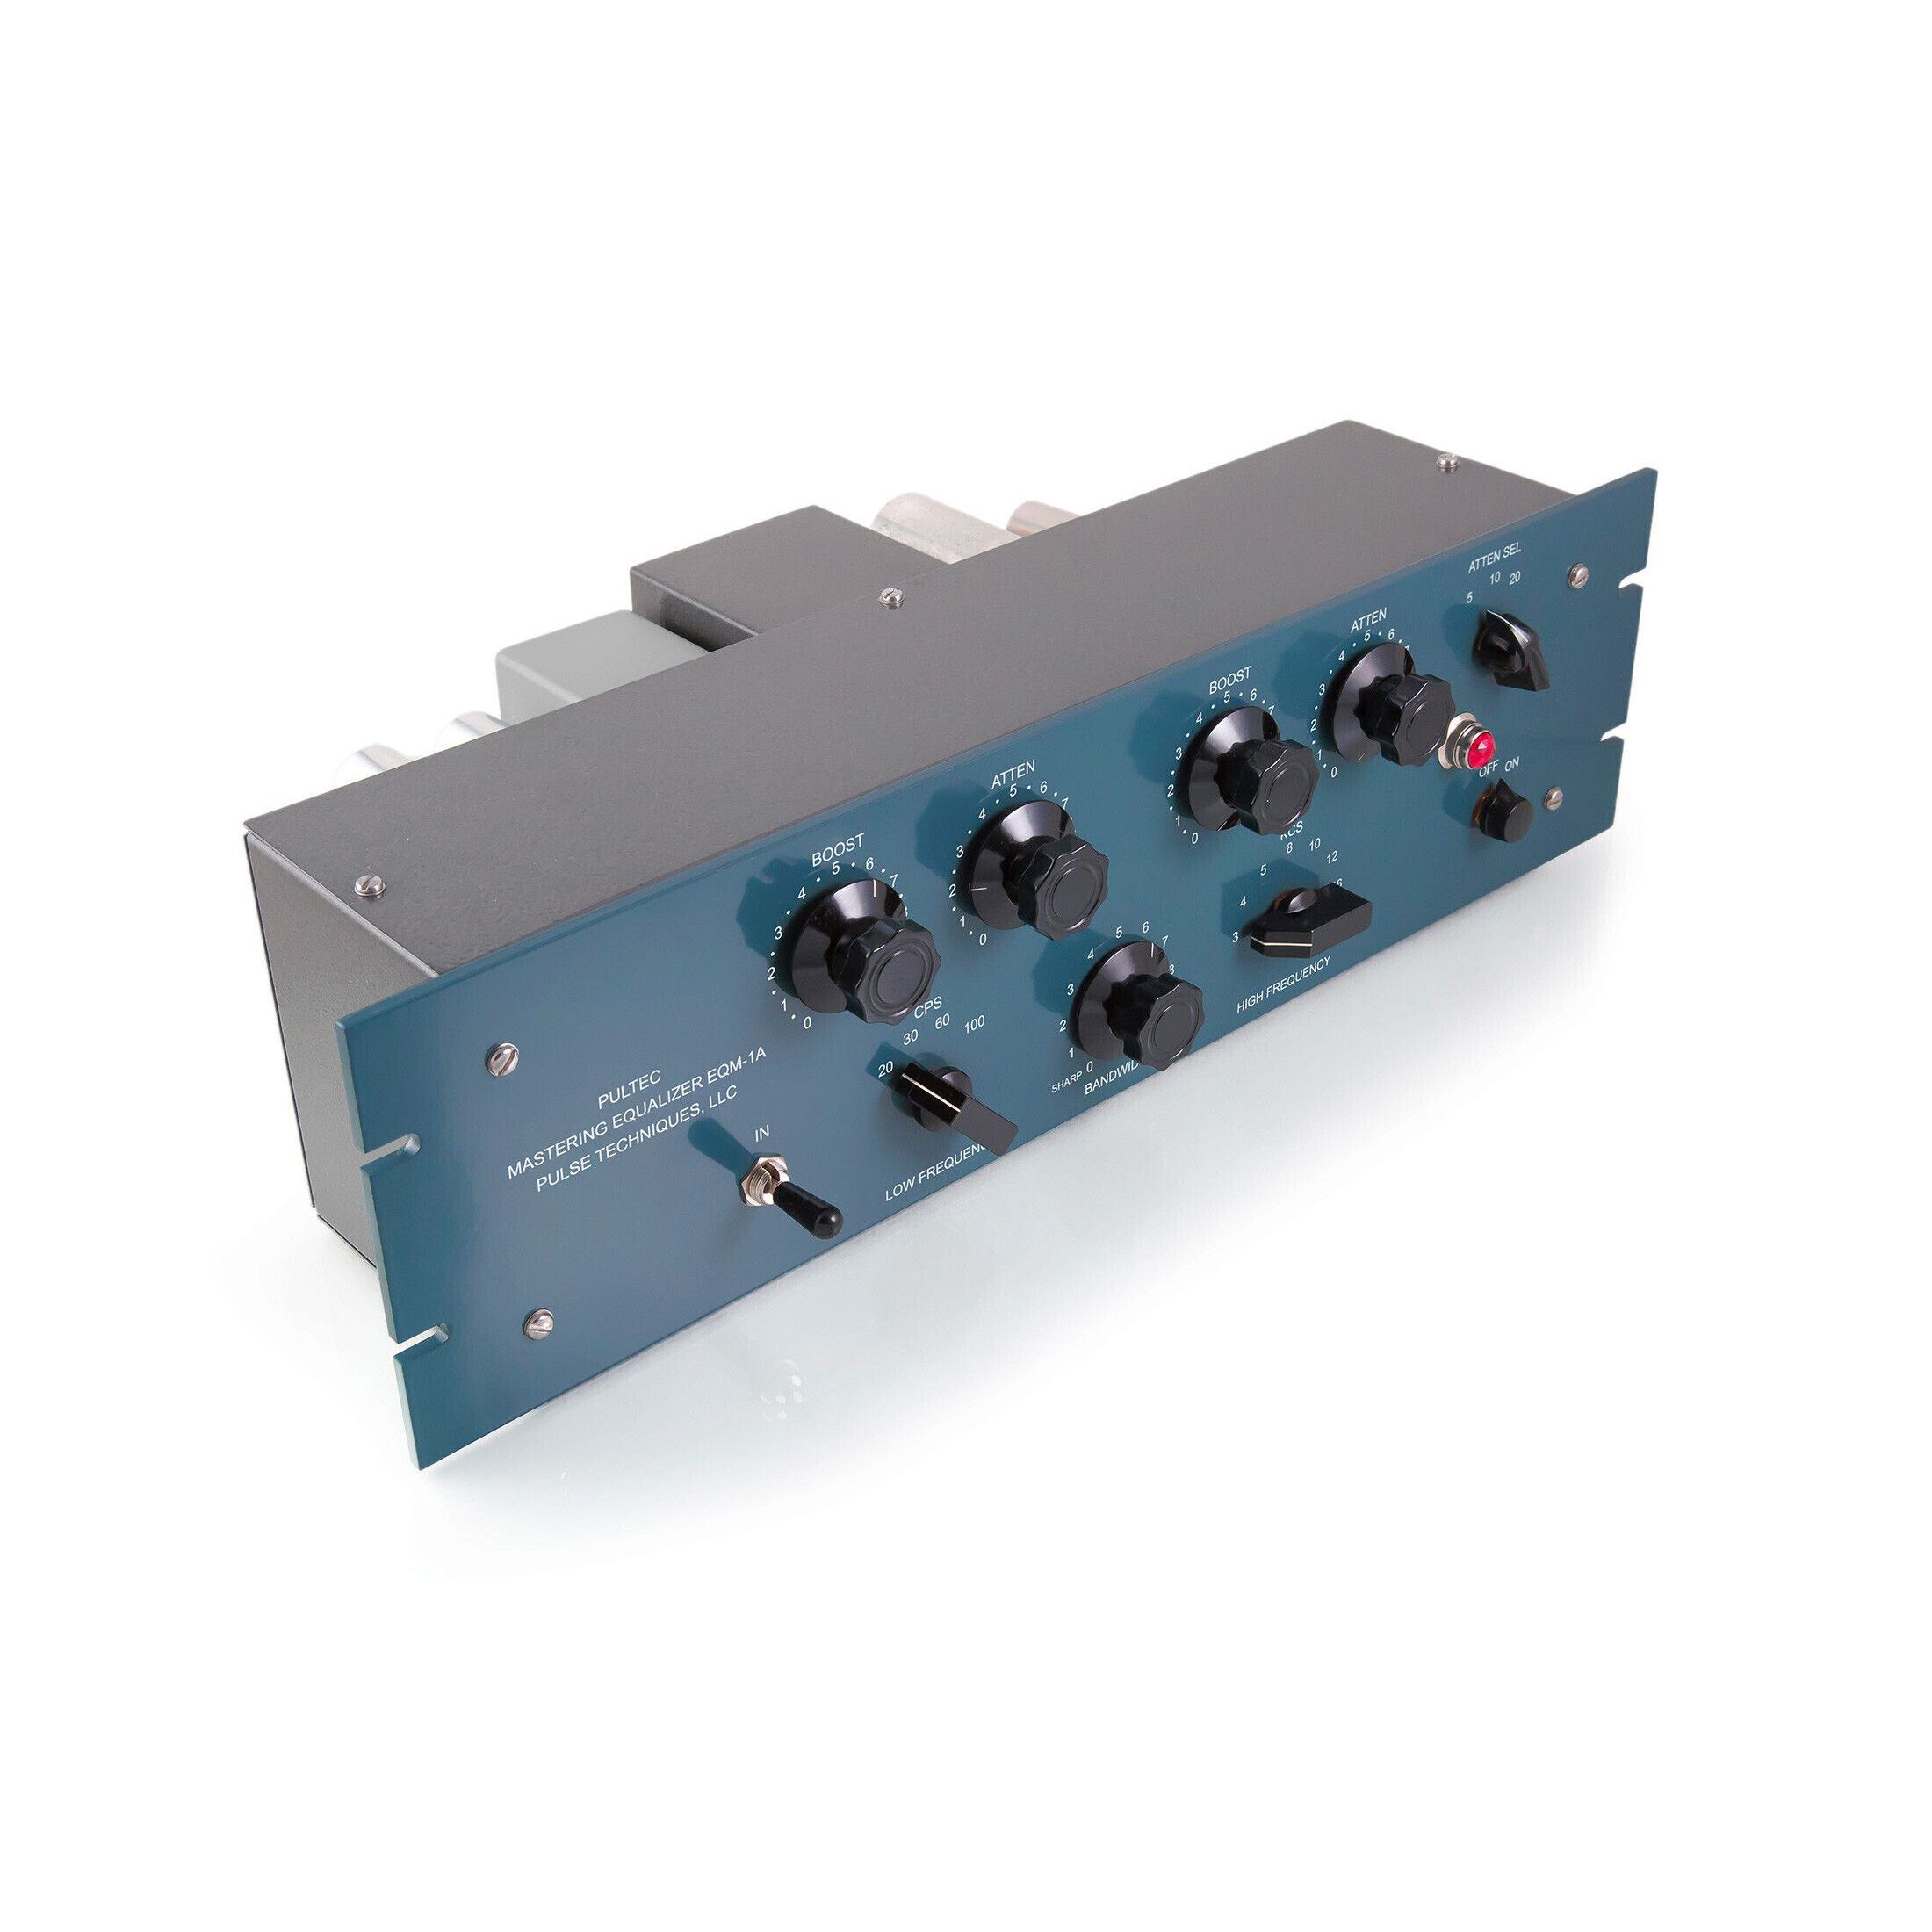 Pultec EQM-1A Mastering Equalizer Частотная обработка звука